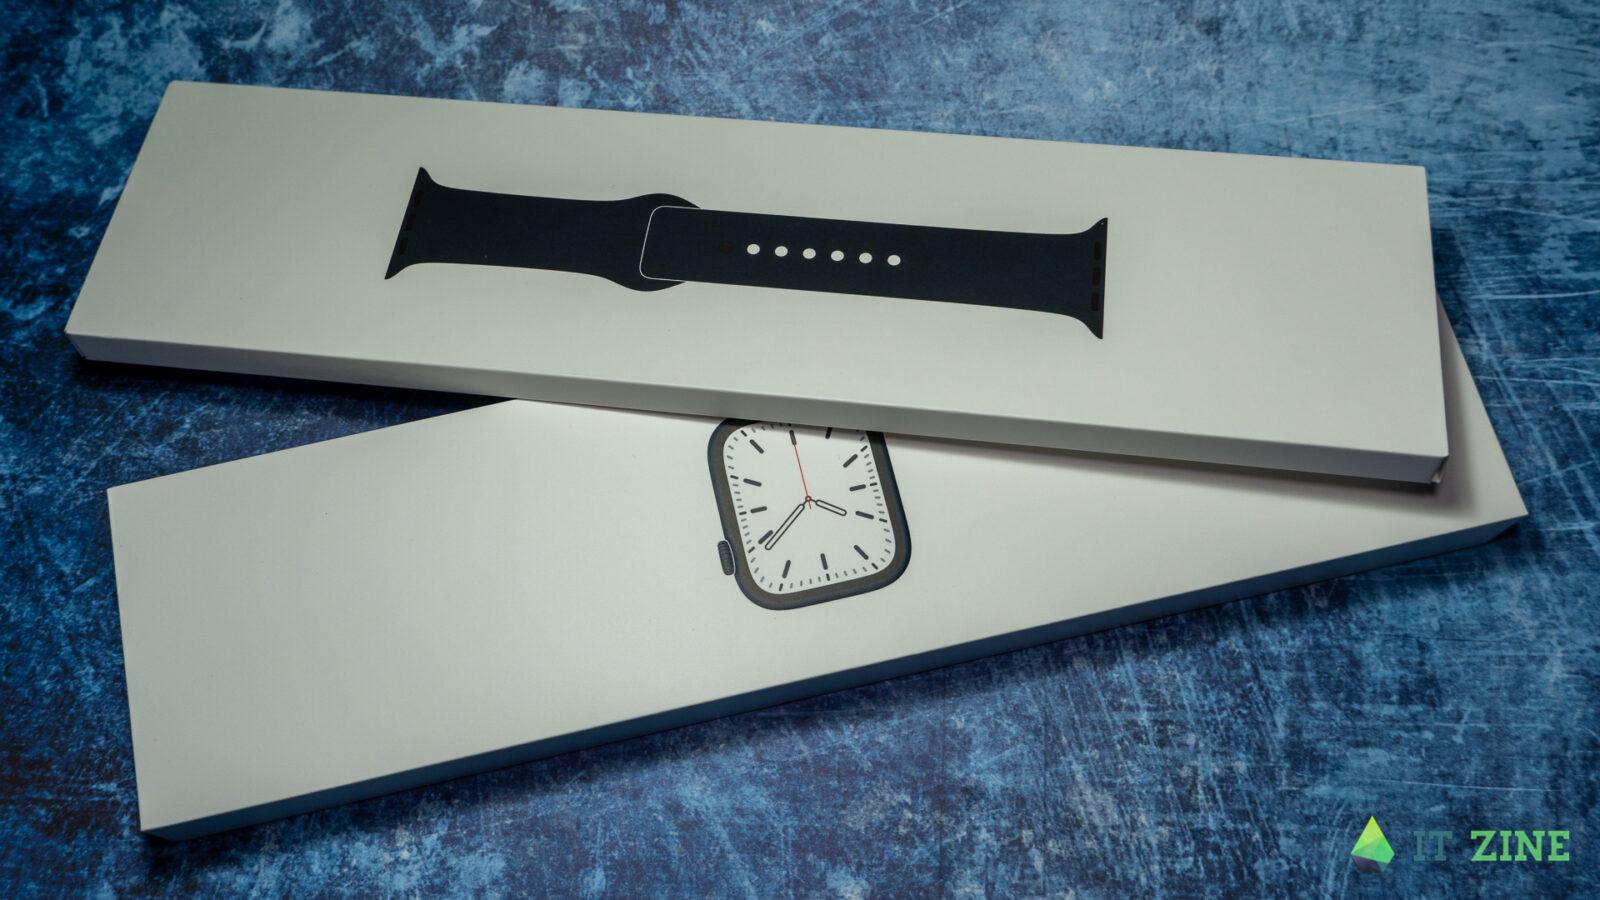 Ремешок и часы внутри коробки Apple Watch Series 7